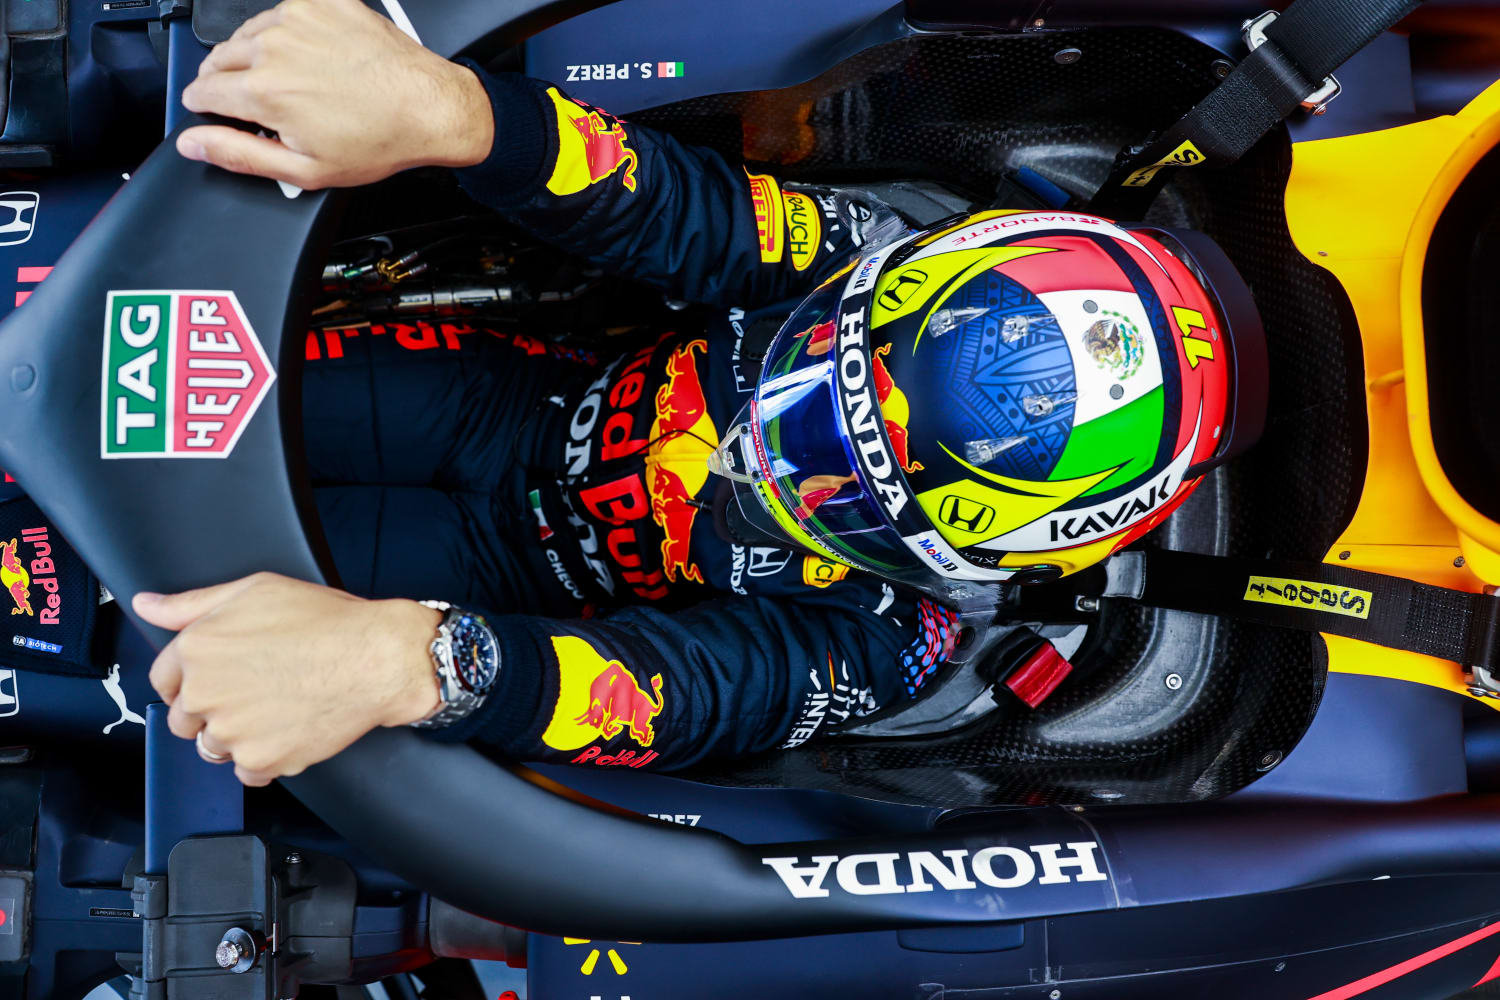 TAG Heuer x Red Bull Racing F1 Team Partnership